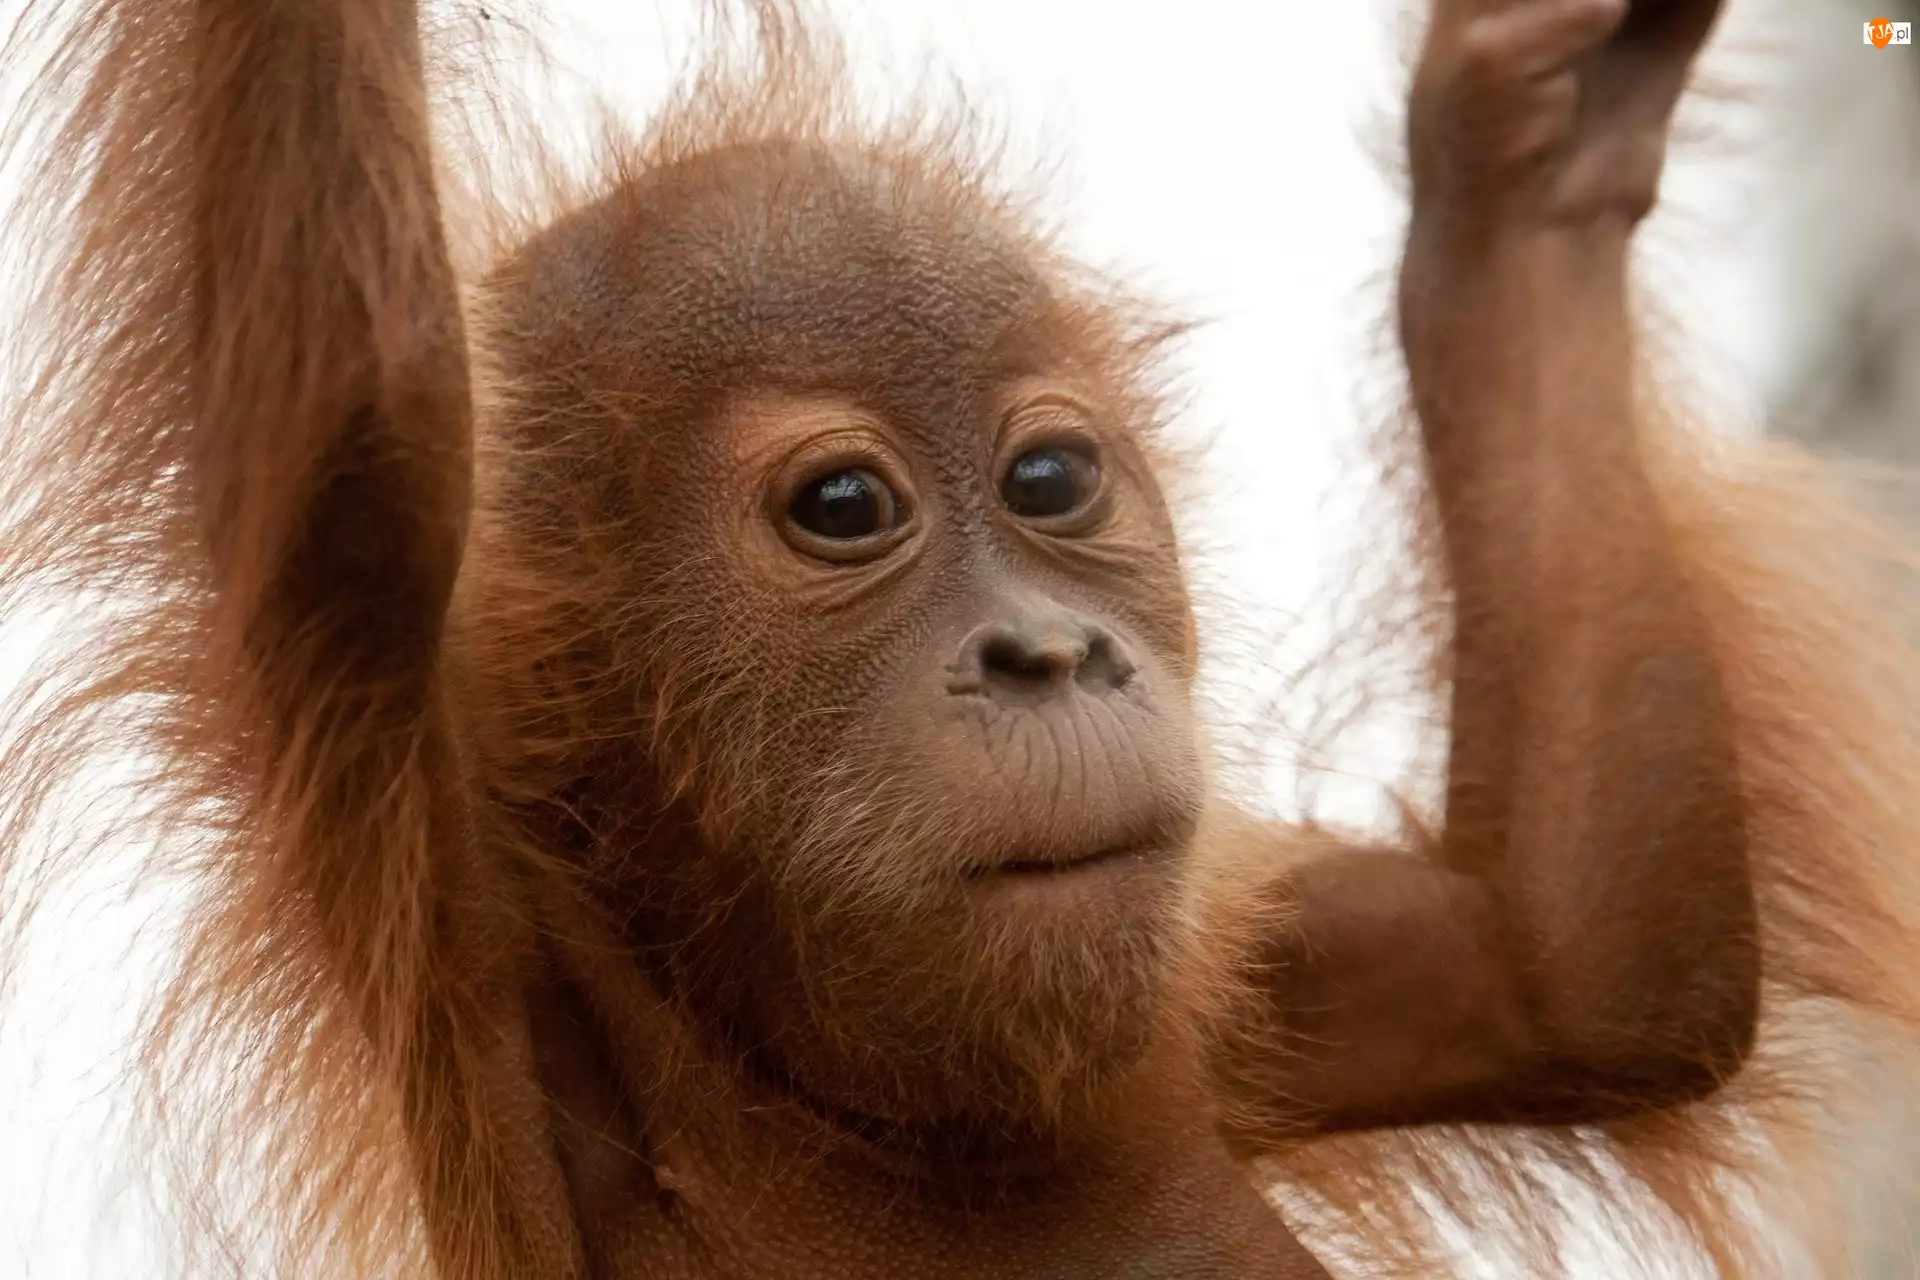 Futro, Młody, Orangutan